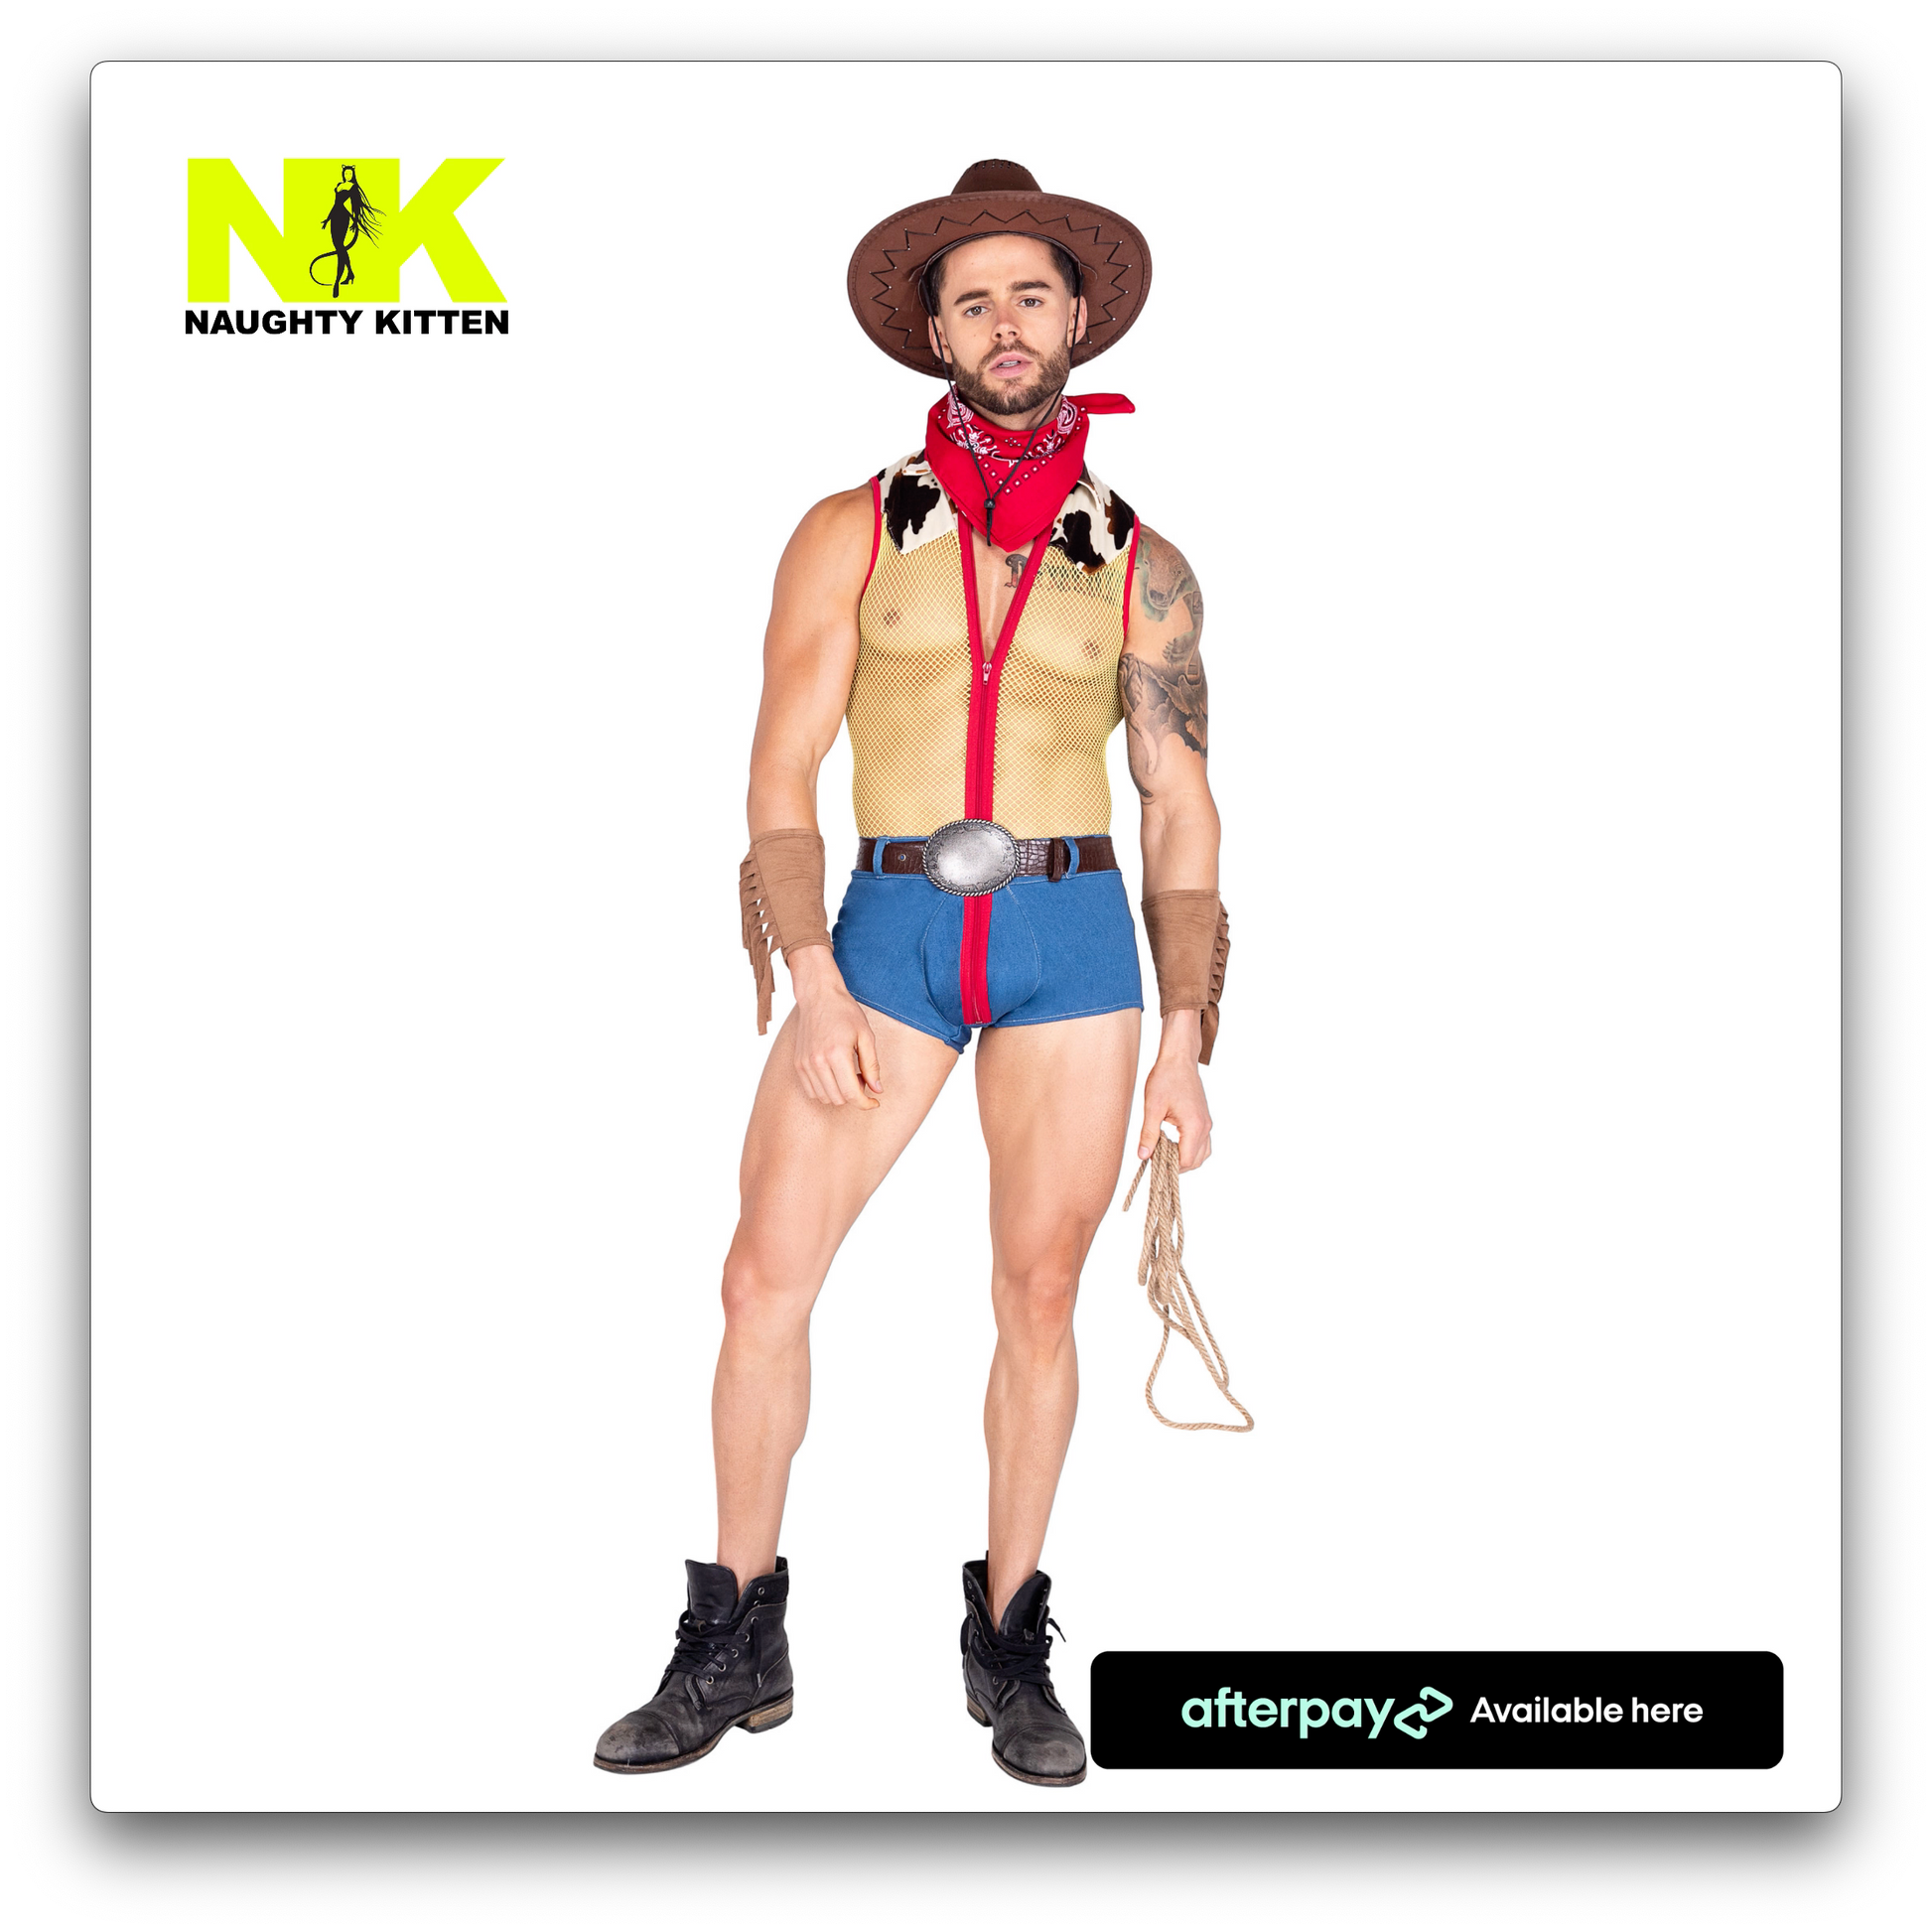 Naughty Kitten Playful Sheriff Men’s Costume Front View